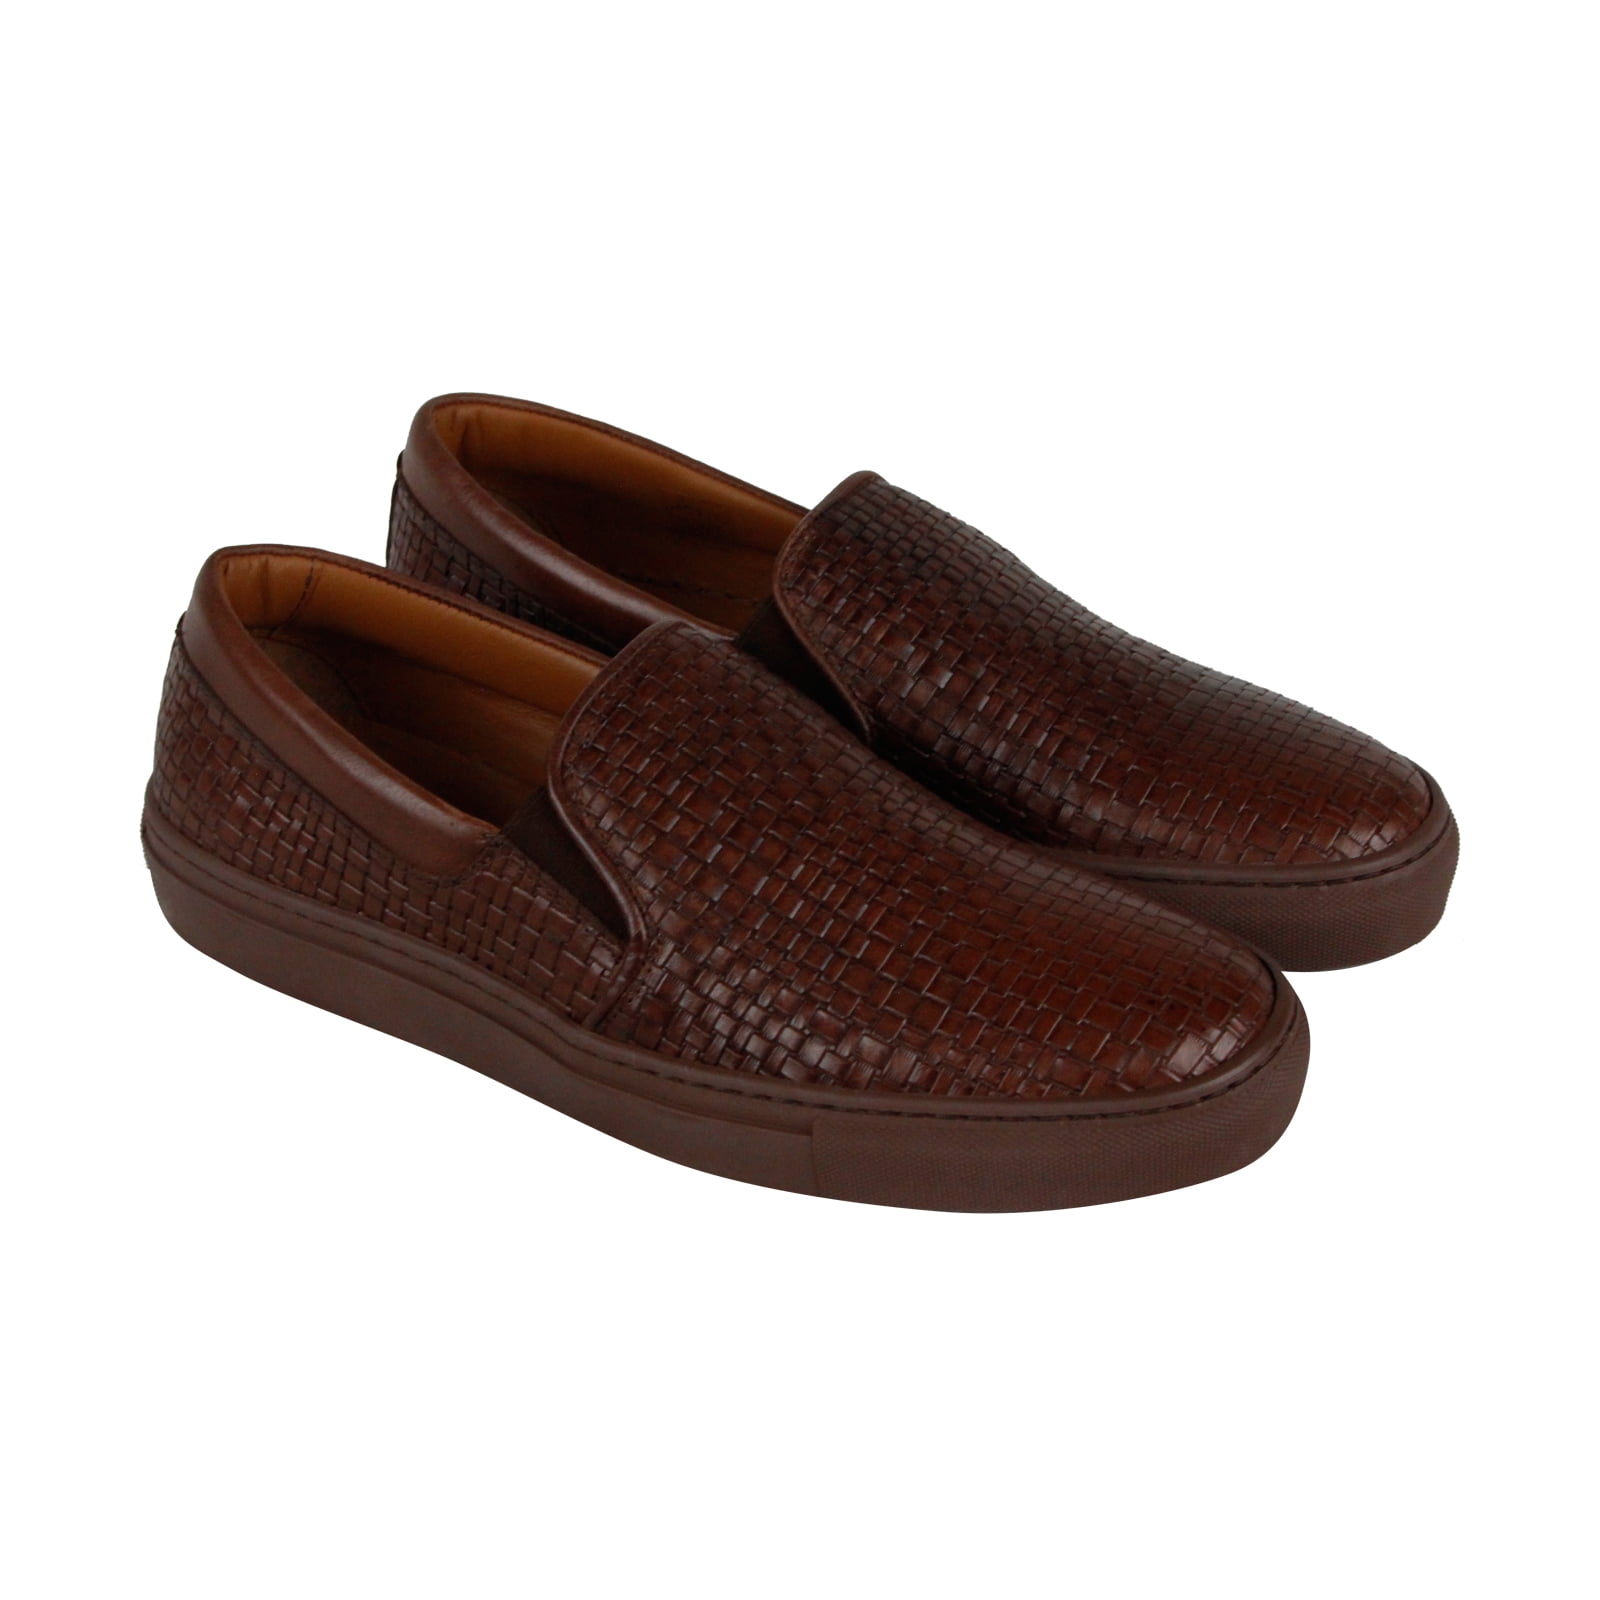 Aquatalia - Aquatalia Anderson Mens Brown Leather Slip On Sneakers ...